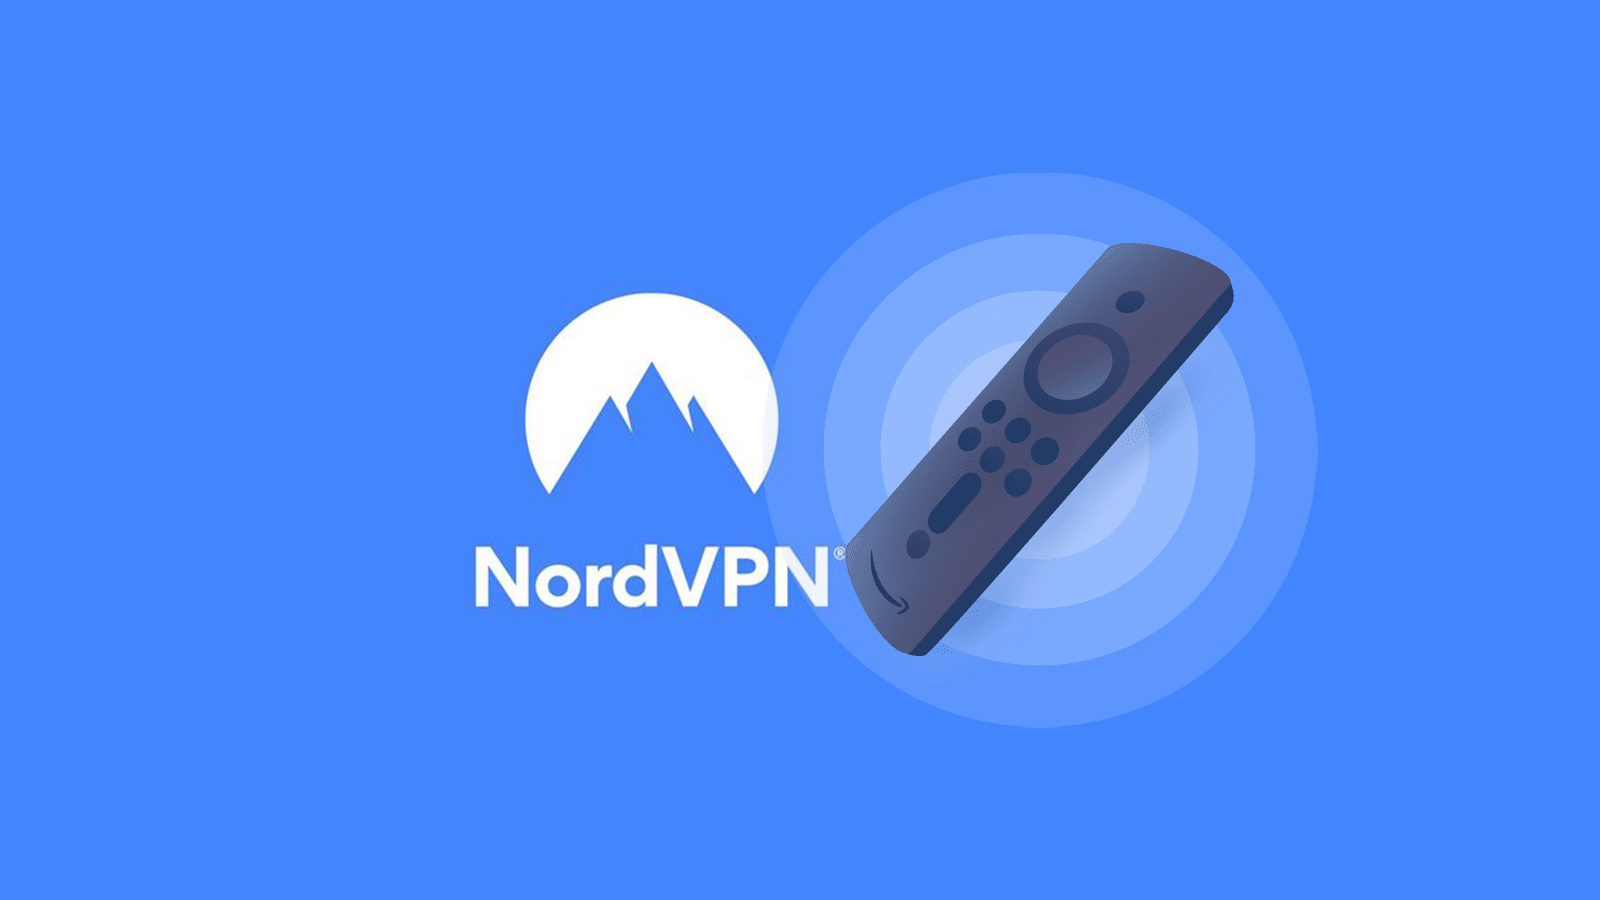 download nordvpn on amazon fire stick